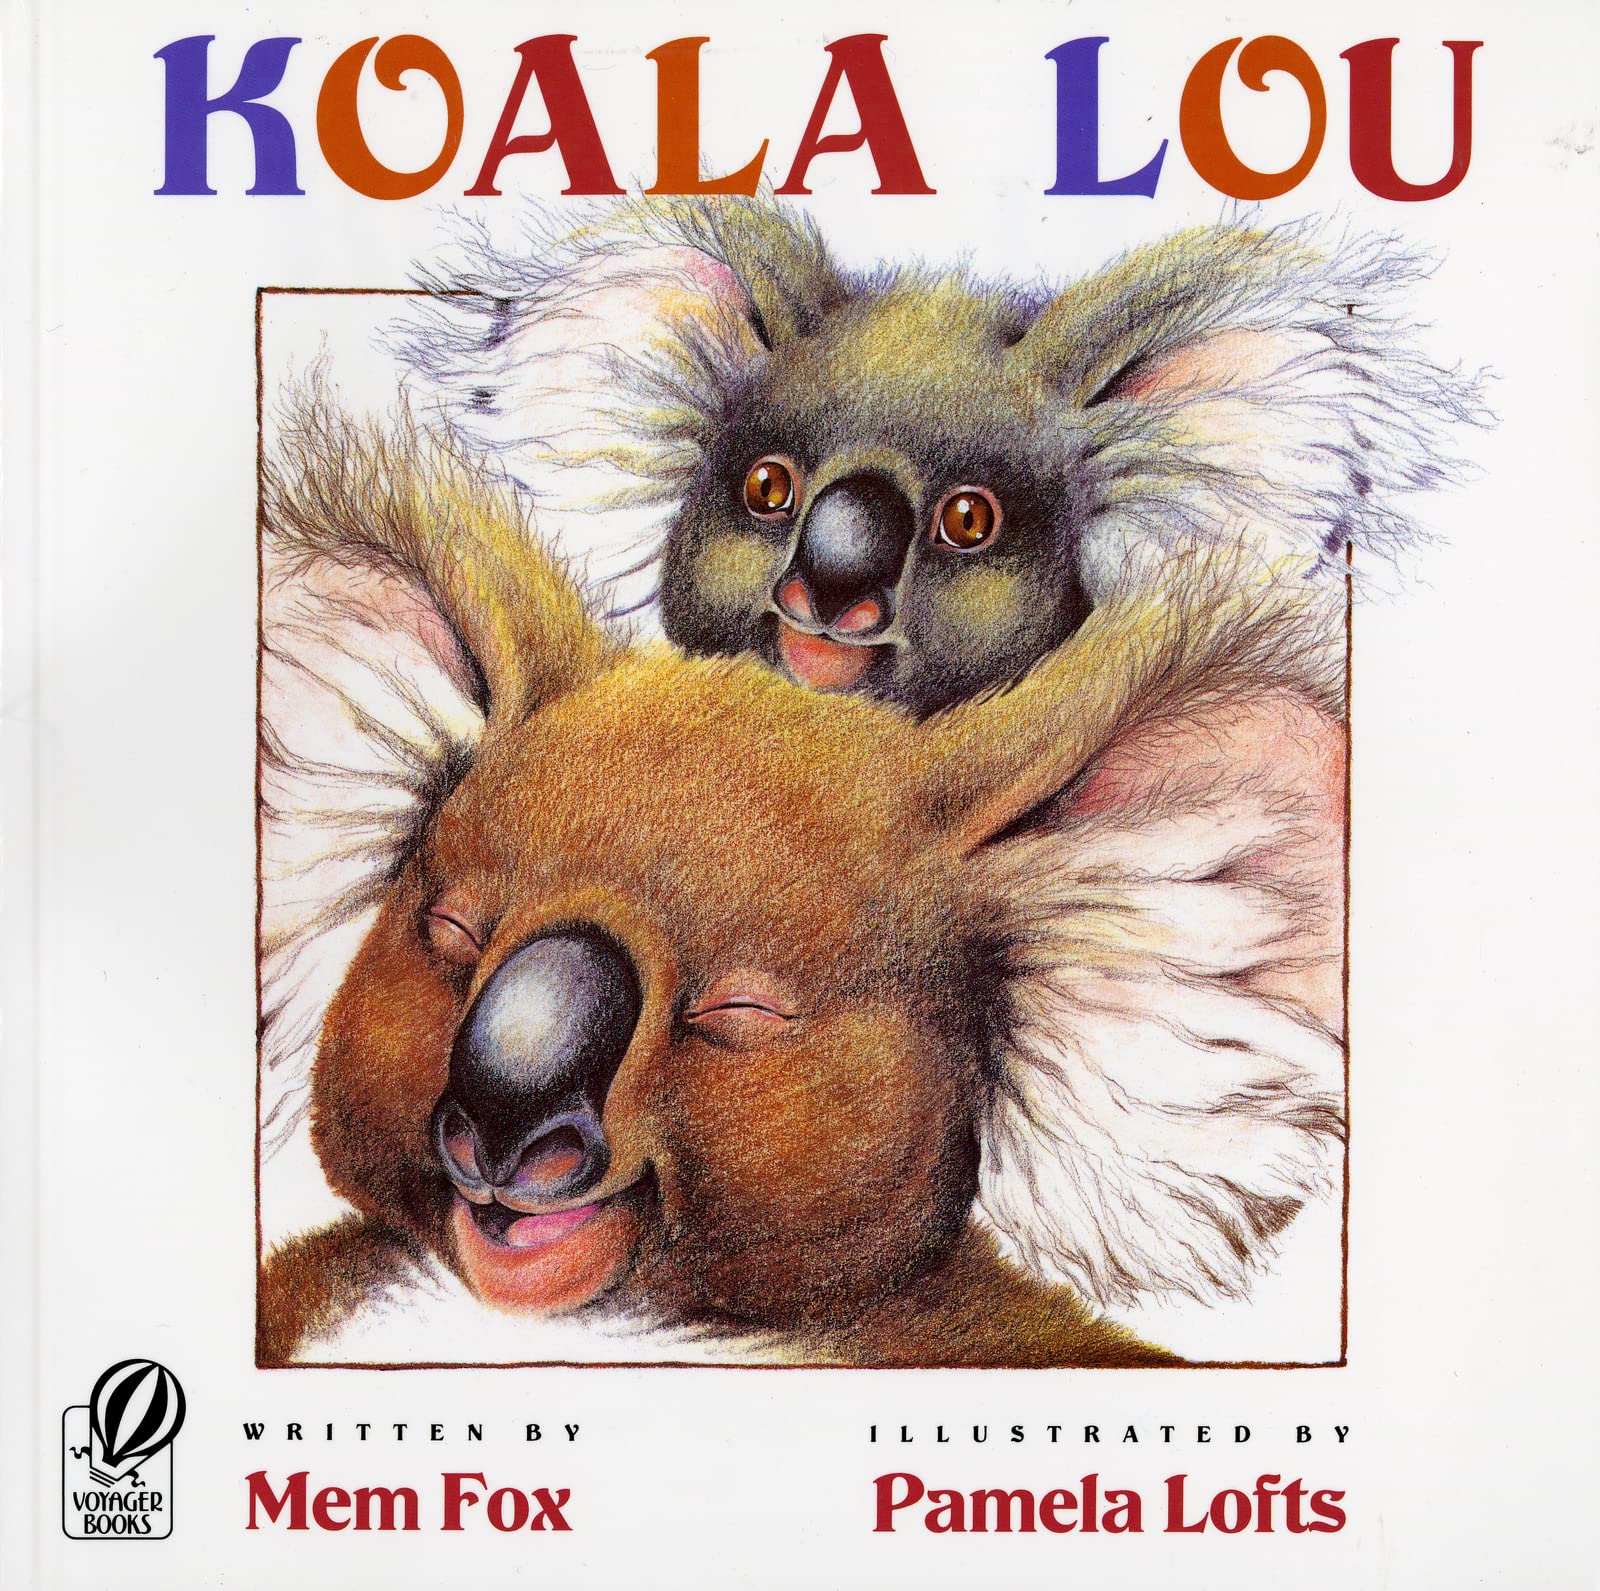 The cover for the book Koala Lou